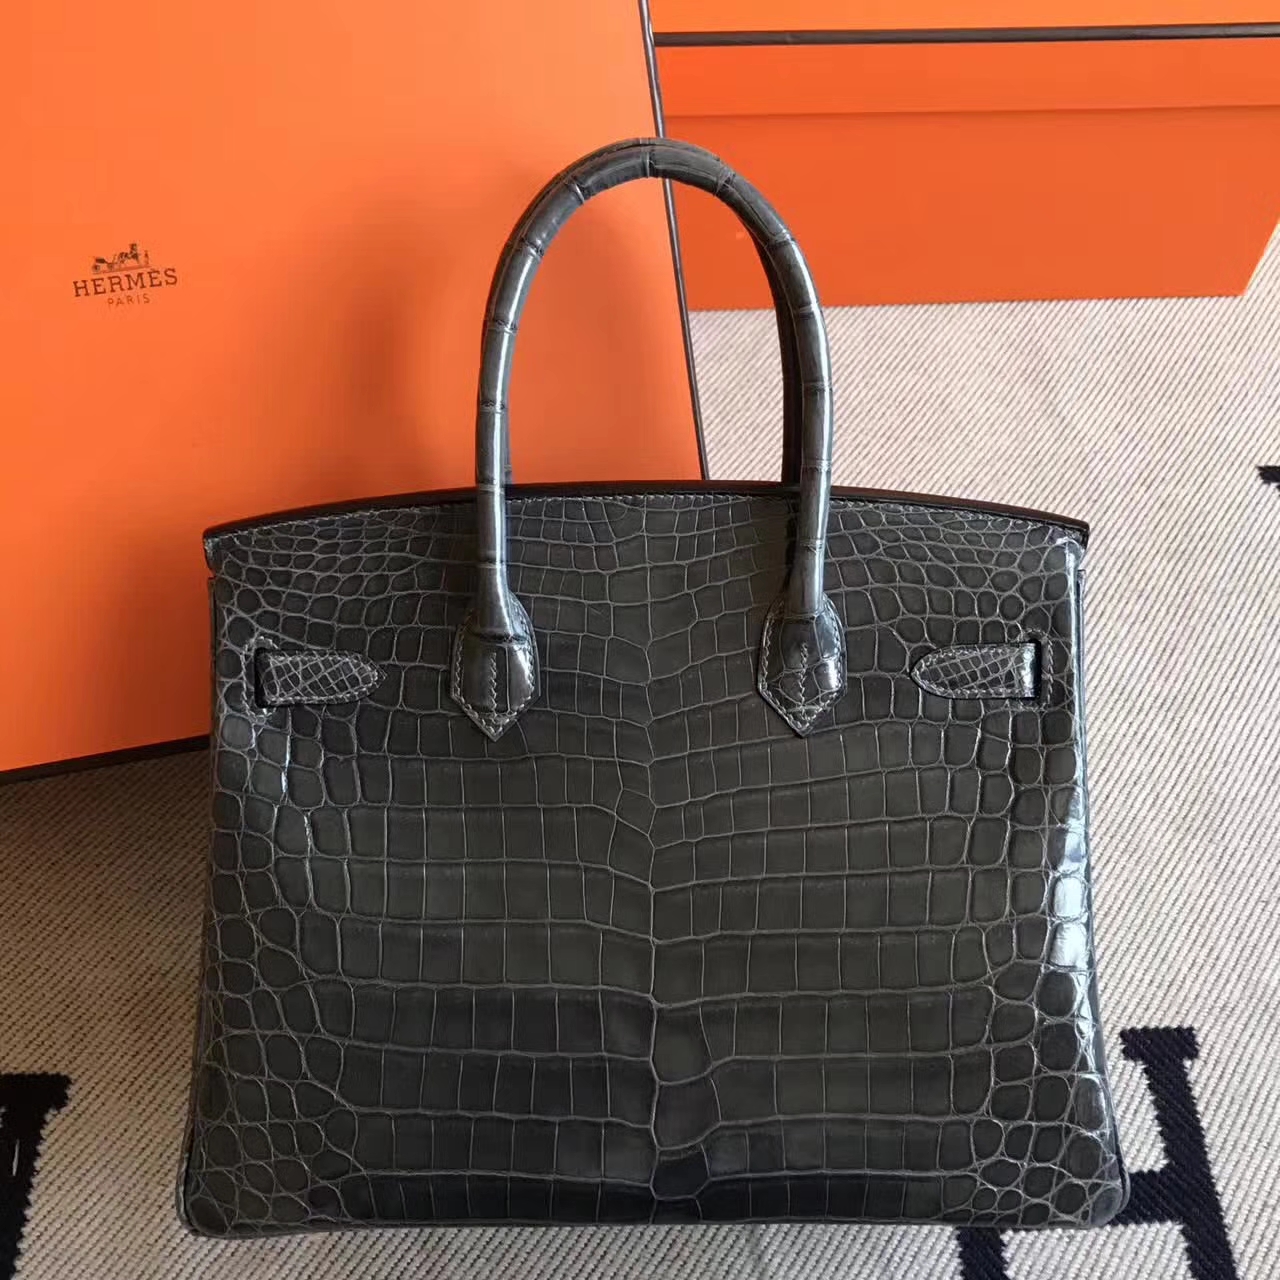 On Sale Hermes Birkin30cm Handbag in Ck88 Graphite Grey Crocodile Shiny Leather